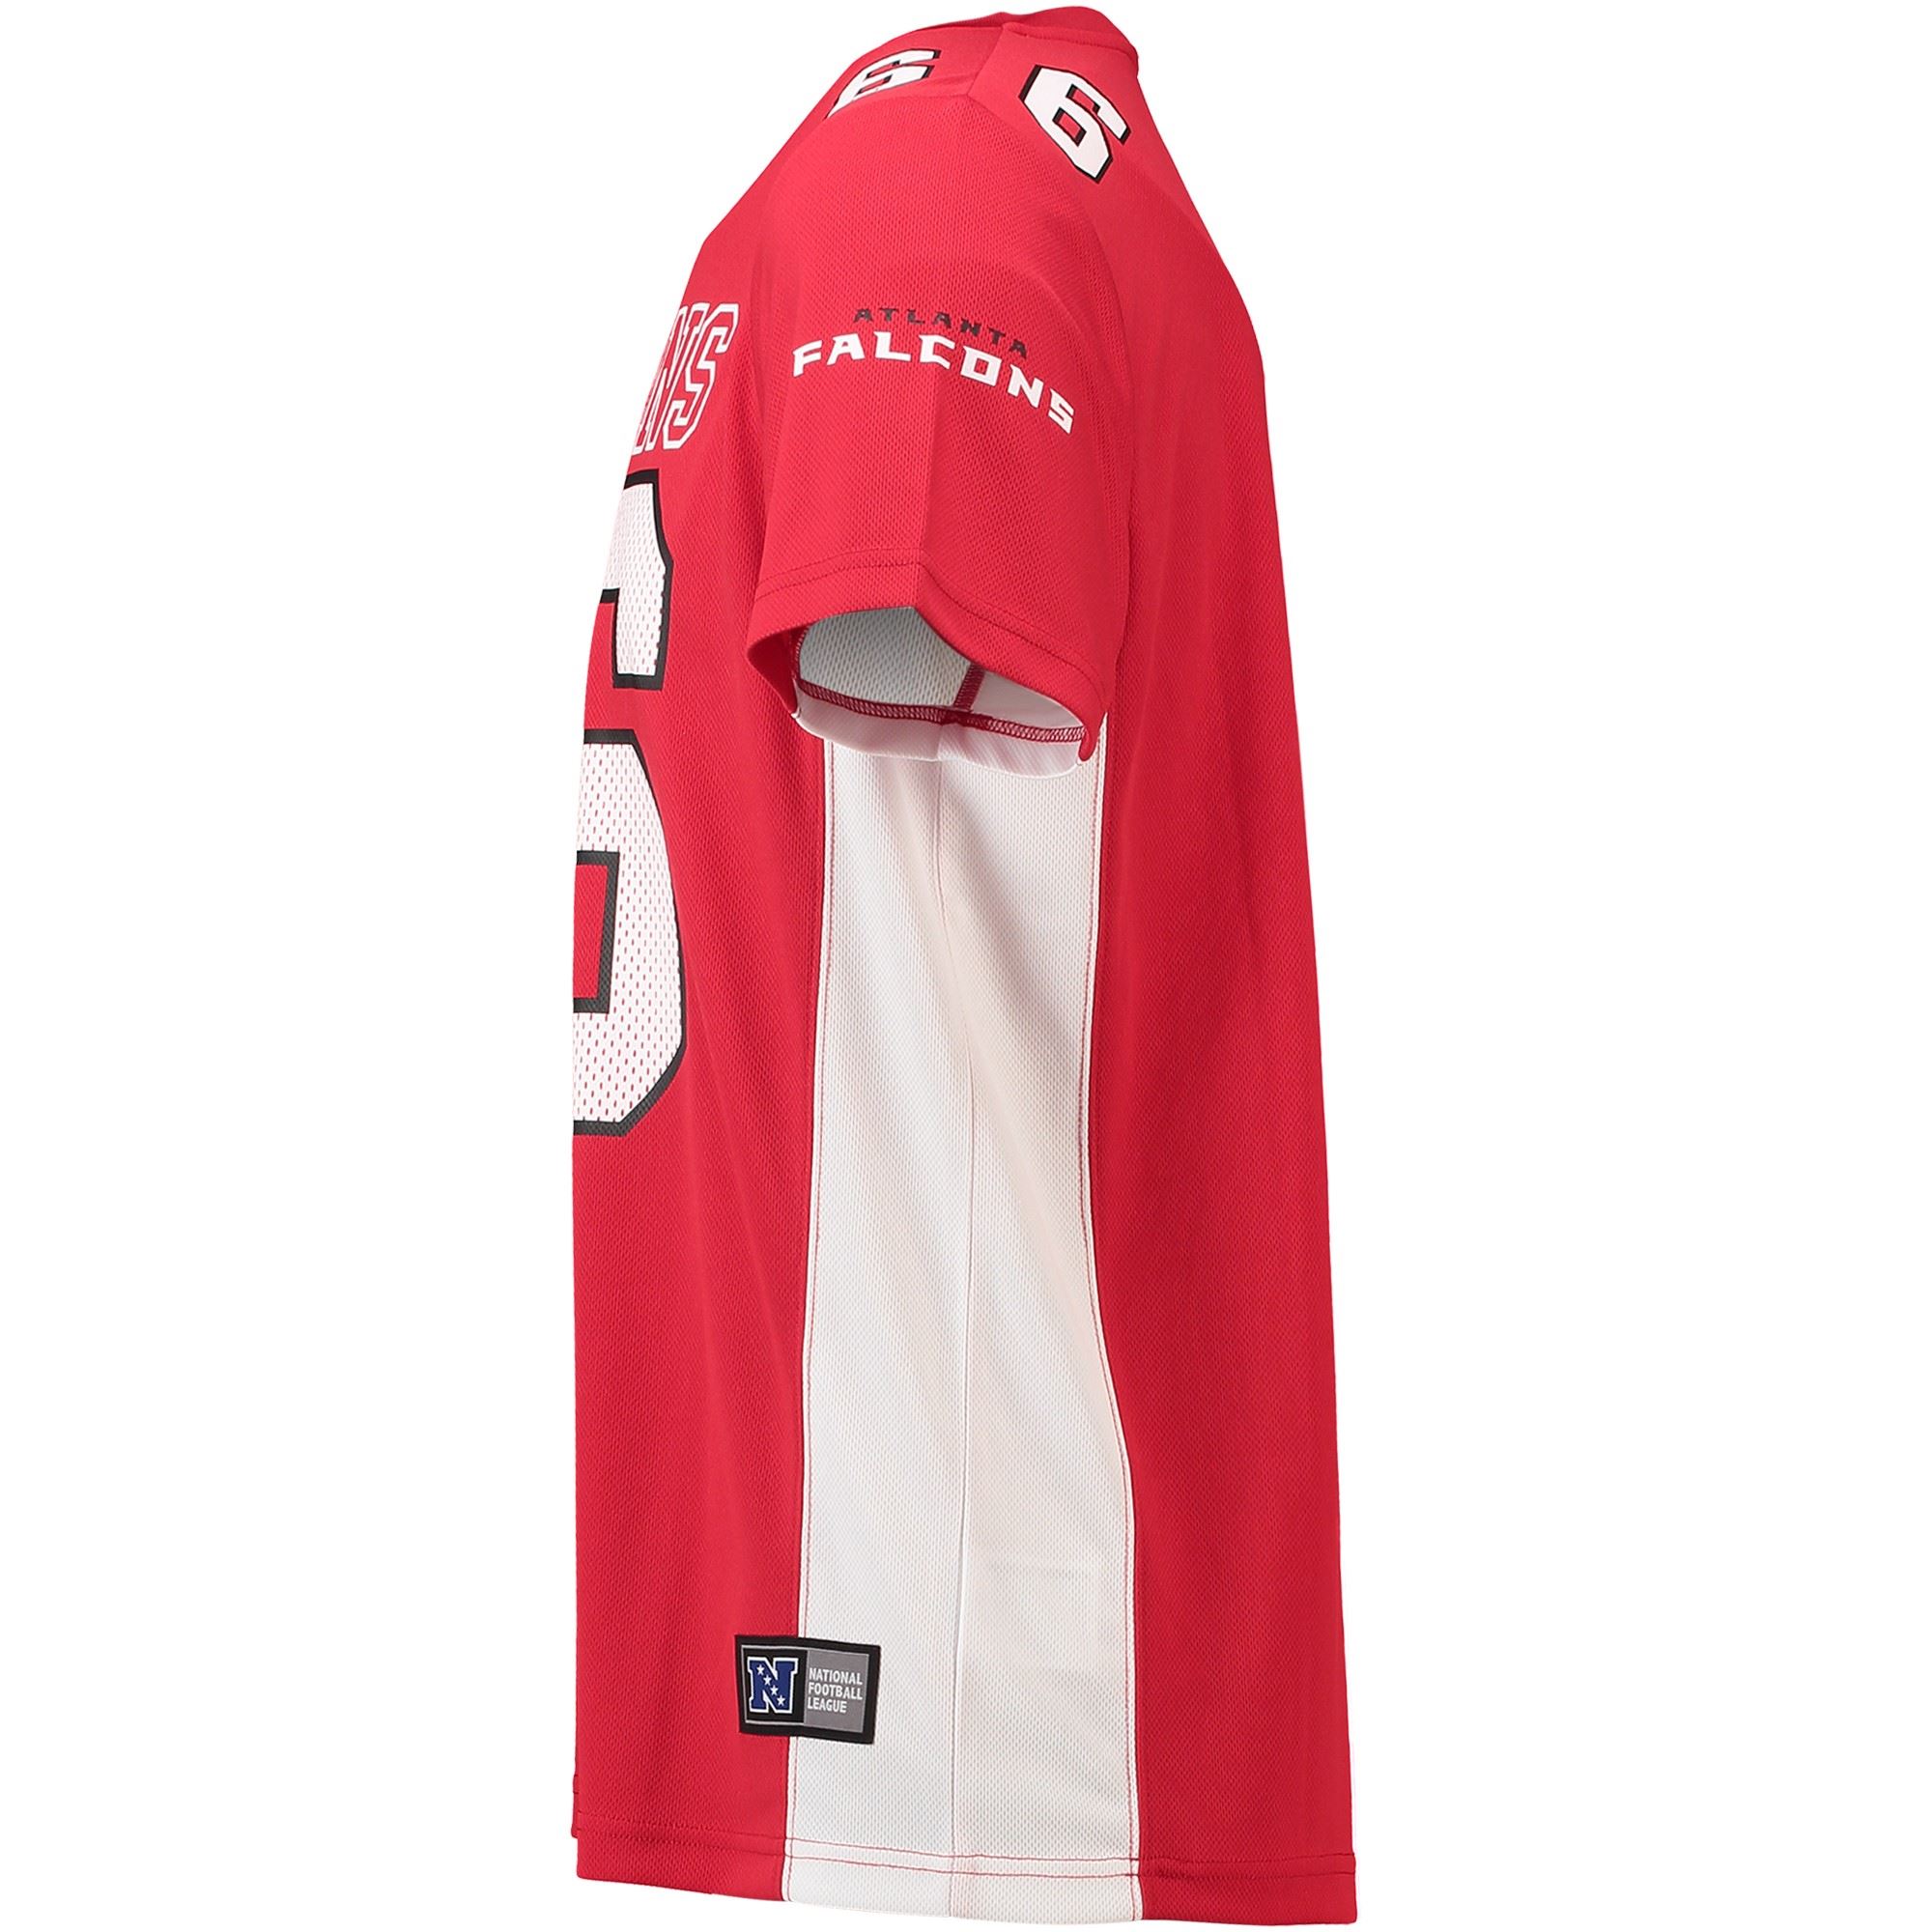 Atlanta Falcons NFL Players Poly Mesh Red T-Shirt Fanatics